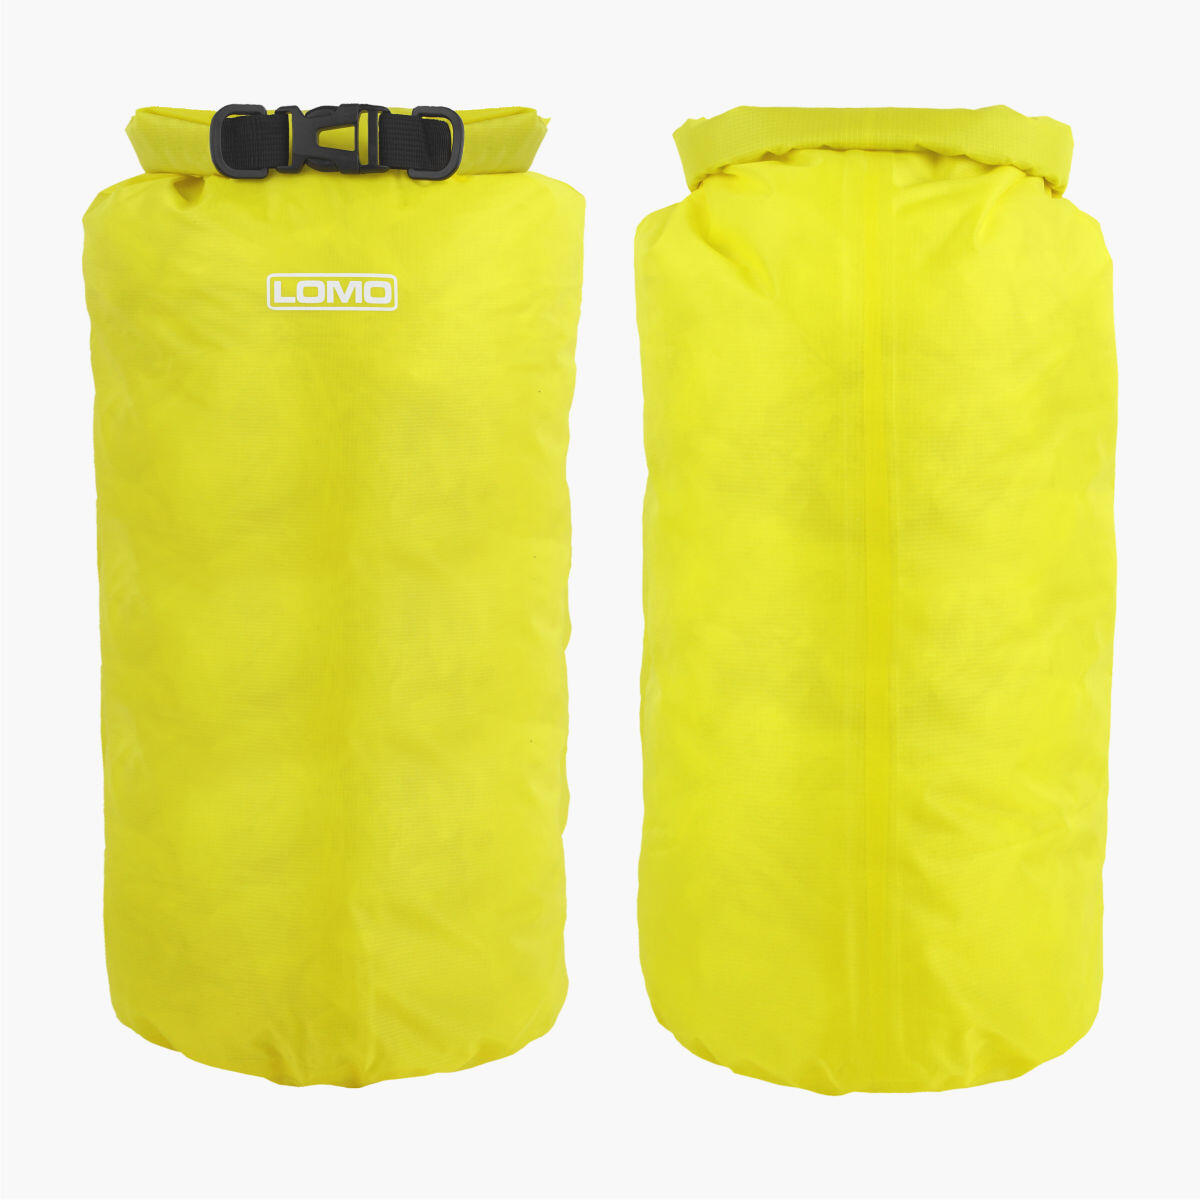 Lomo 20L TPU Dry Bag - Yellow 1/5